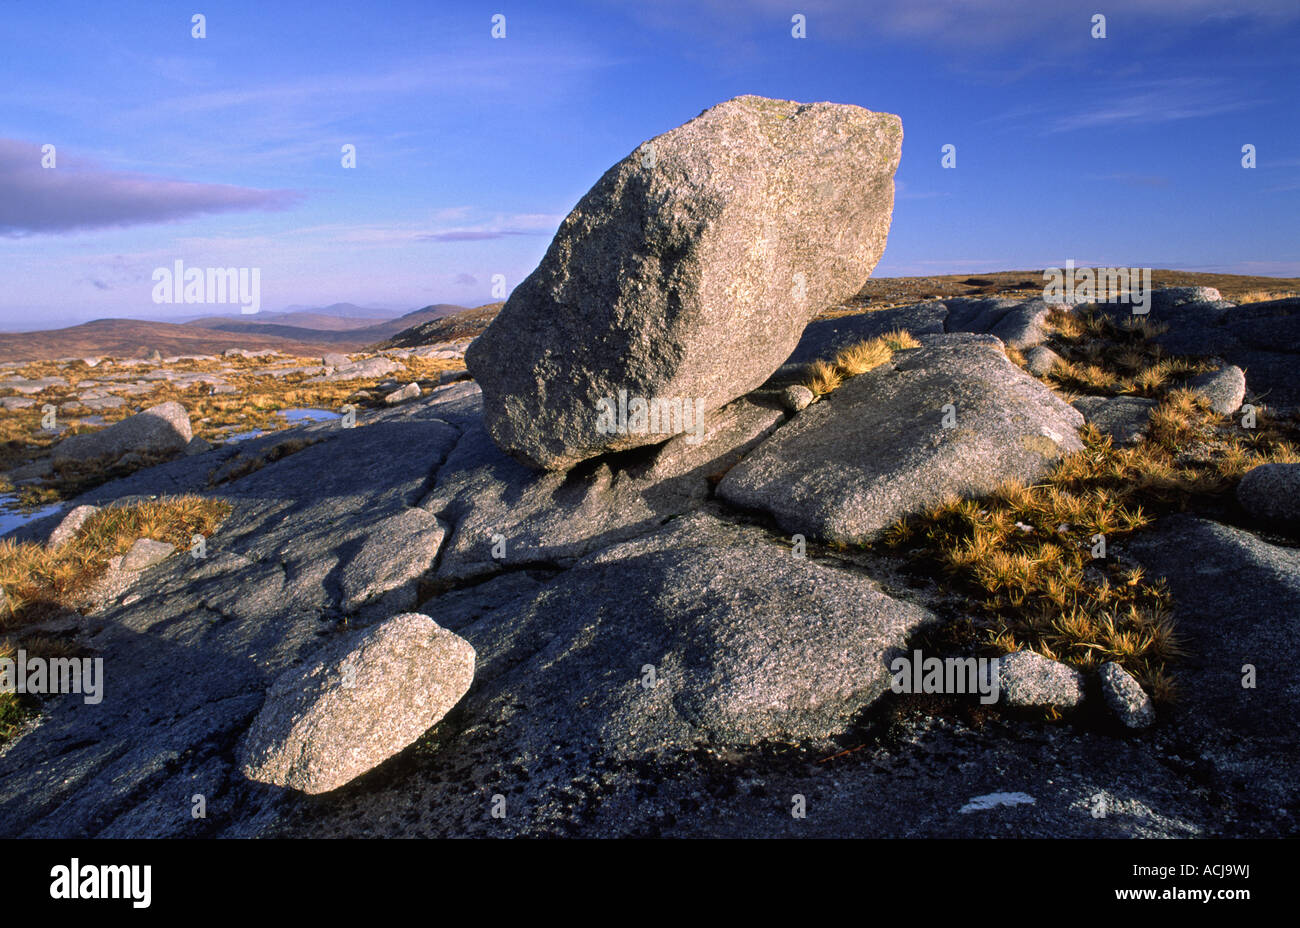 Granit glazialen erratischen nahe dem Gipfel des Glendowan Moylenanav berg, berge, County Donegal, Irland. Stockfoto